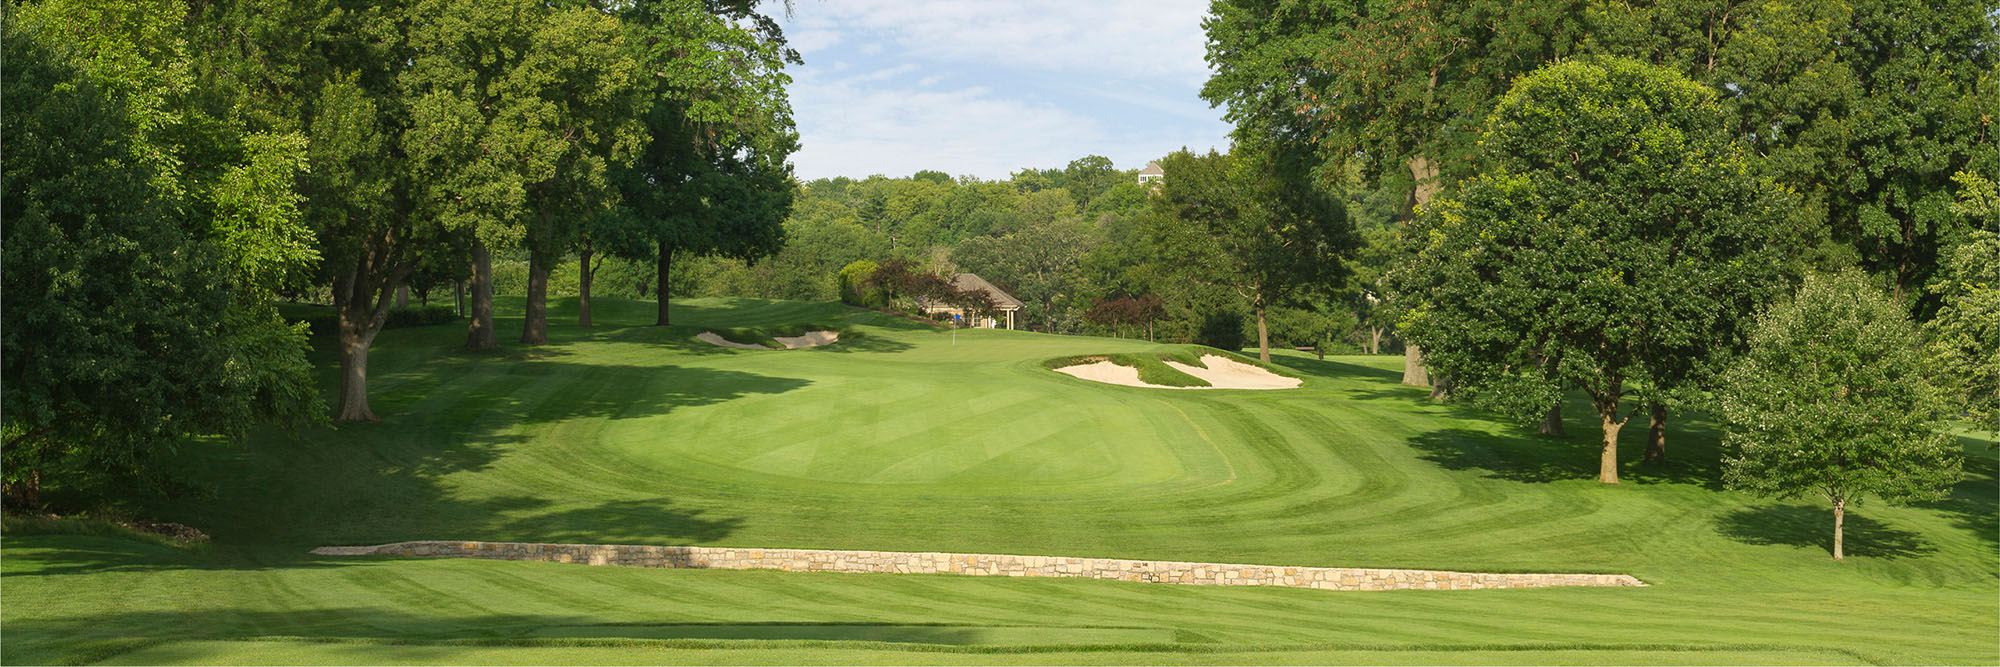 Golf Course Image - Mission Hills No. 13